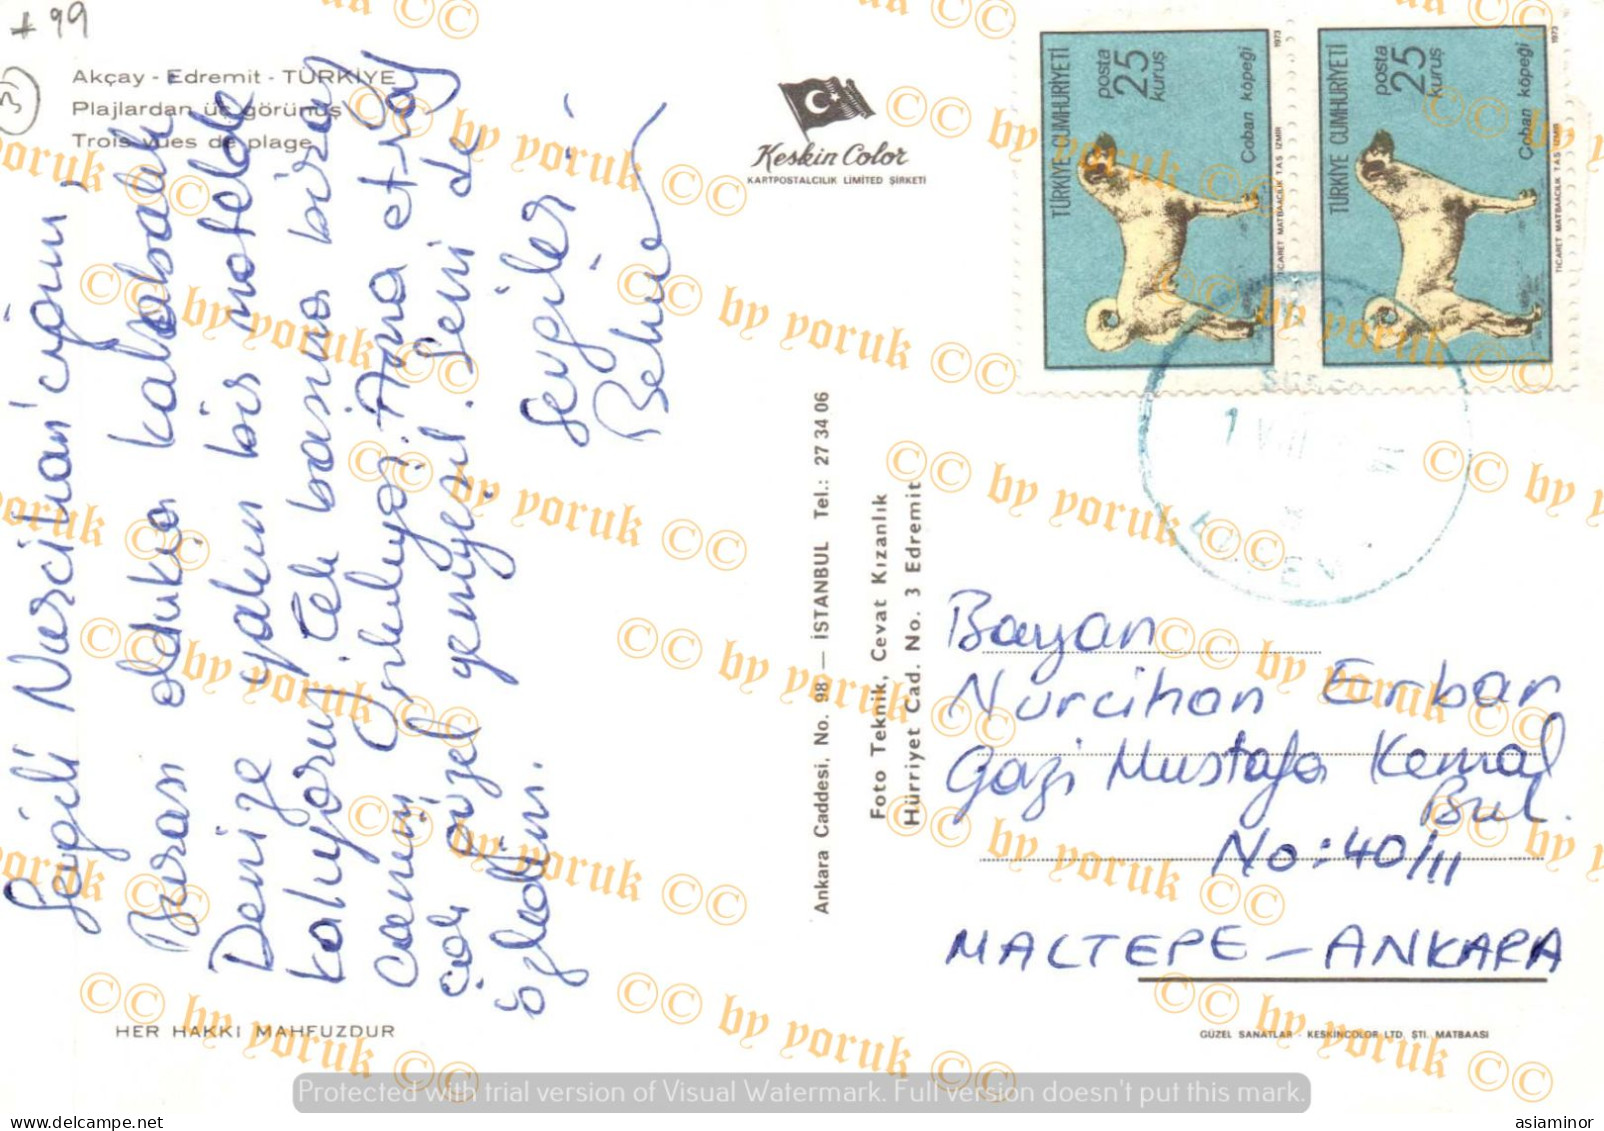 Postcard - 1974 Postmark - 10x15 Cm. | Turkey, Balıkesir, Edremit, Akçay - Three Views From The Beaches. * - Turquia